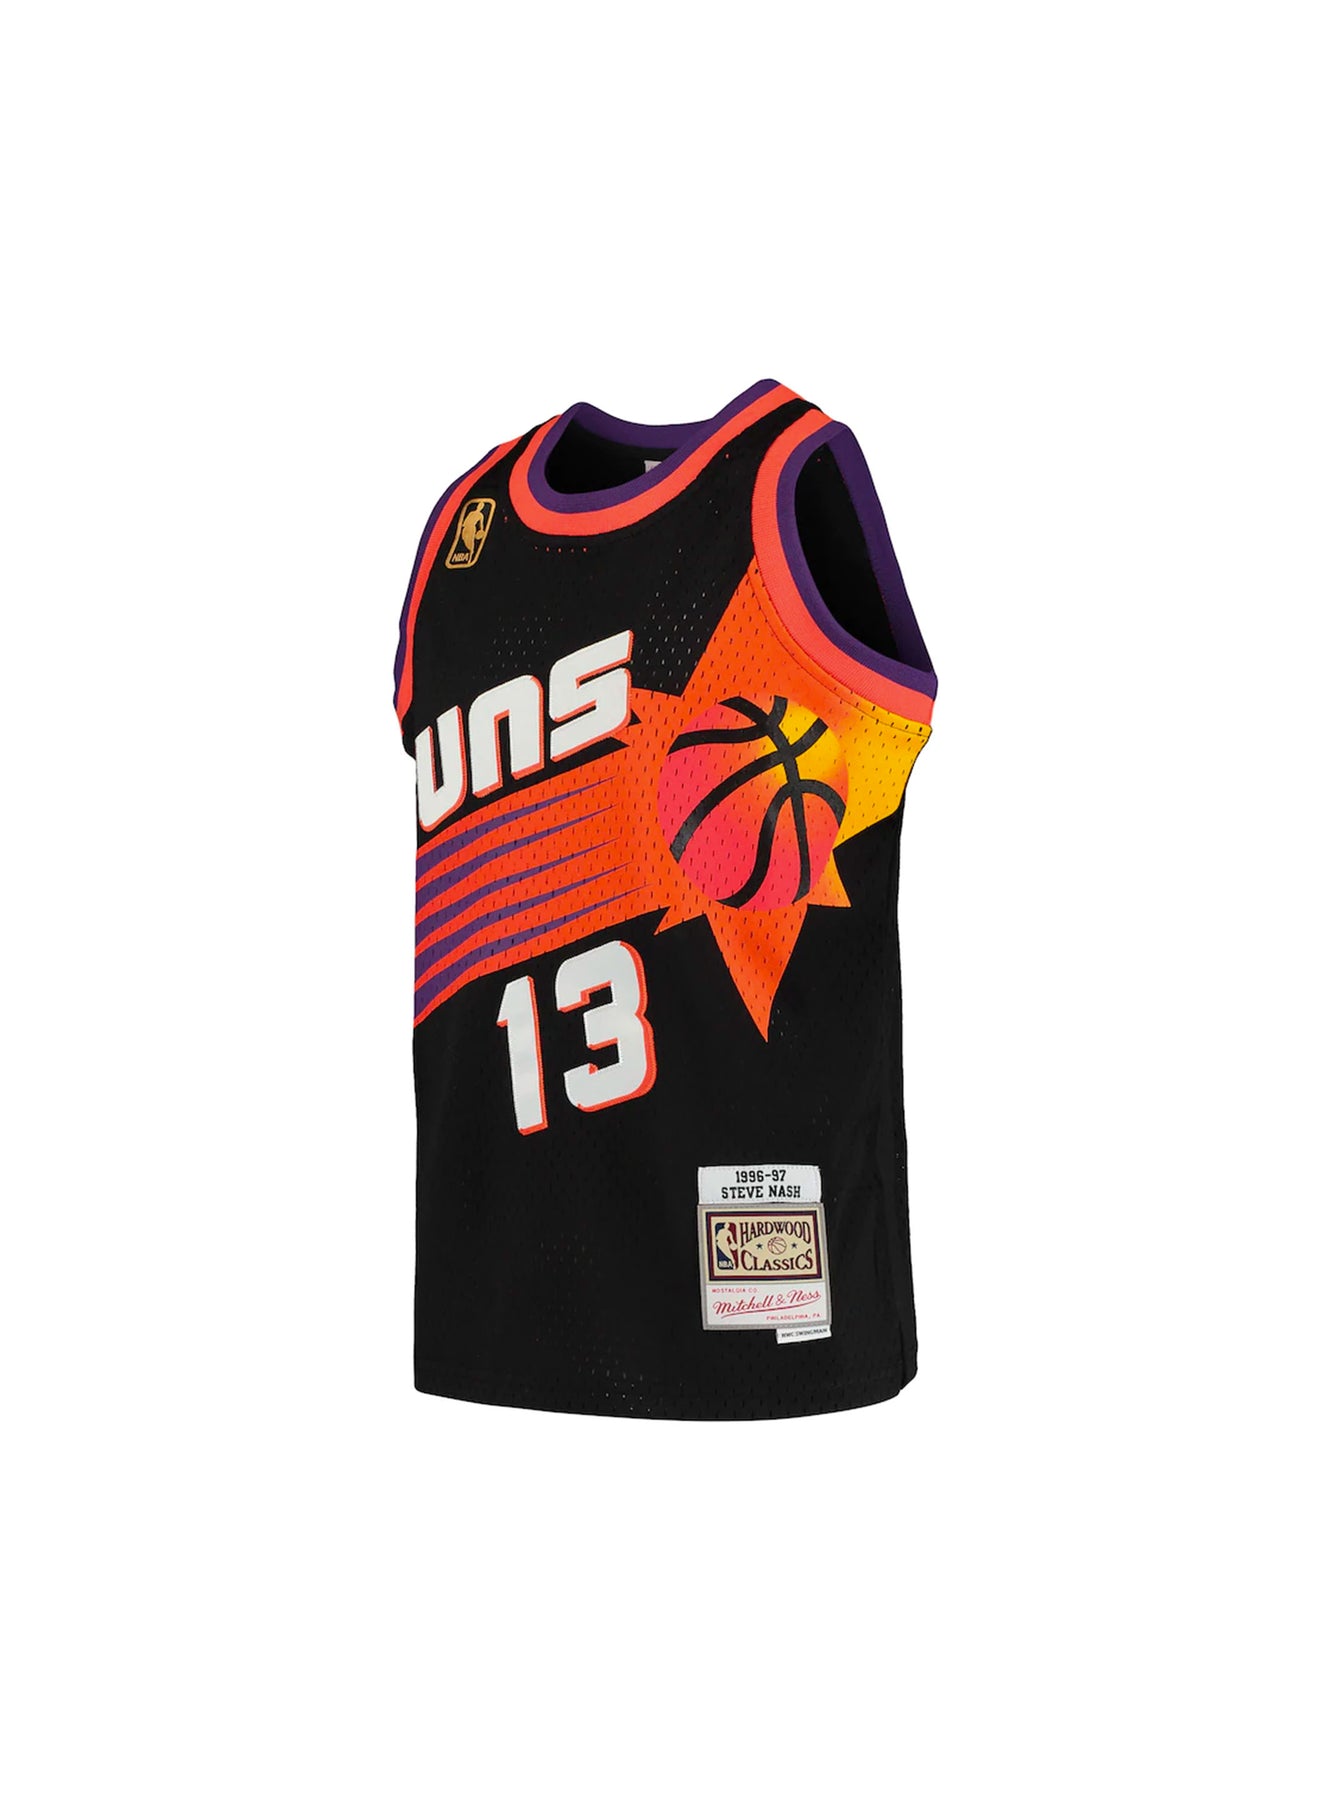 Steve Nash Dallas Mavericks Champion NBA VINTAGE Jersey - XL